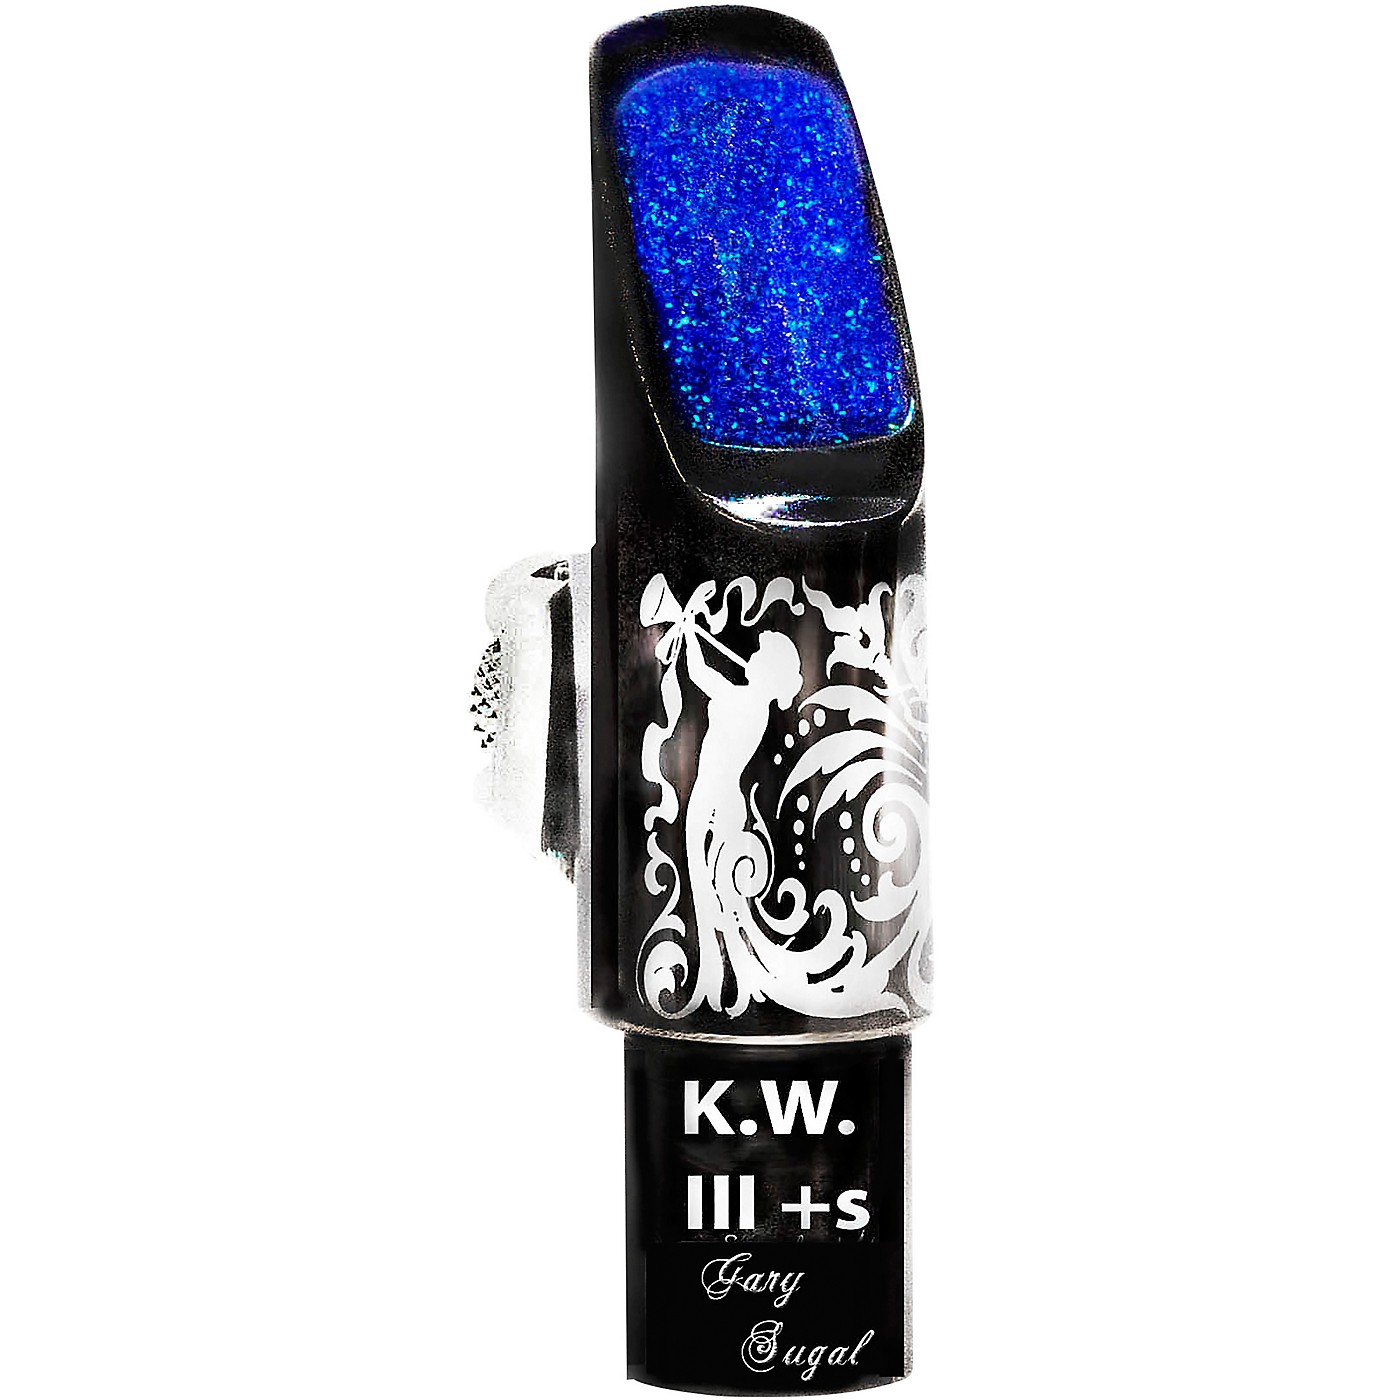 Sugal KW III + s Laser Enhanced Black Hematite Tenor Saxophone Mouthpiece thumbnail